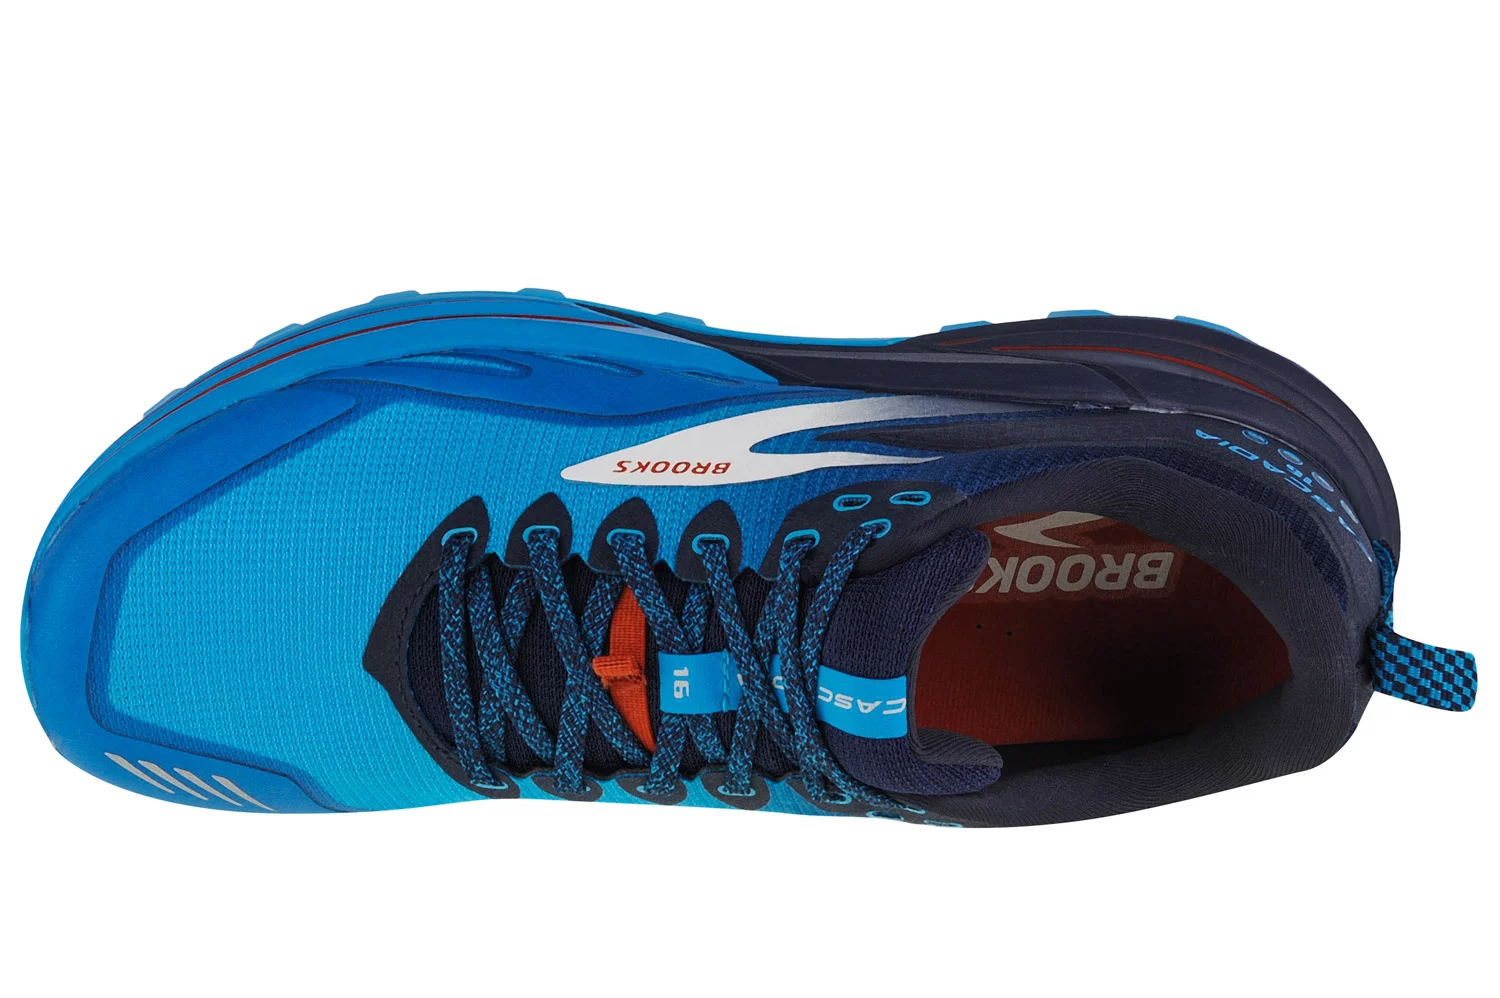 Brooks Cascadia 16 Men's Trail Running Shoes 1103761D490